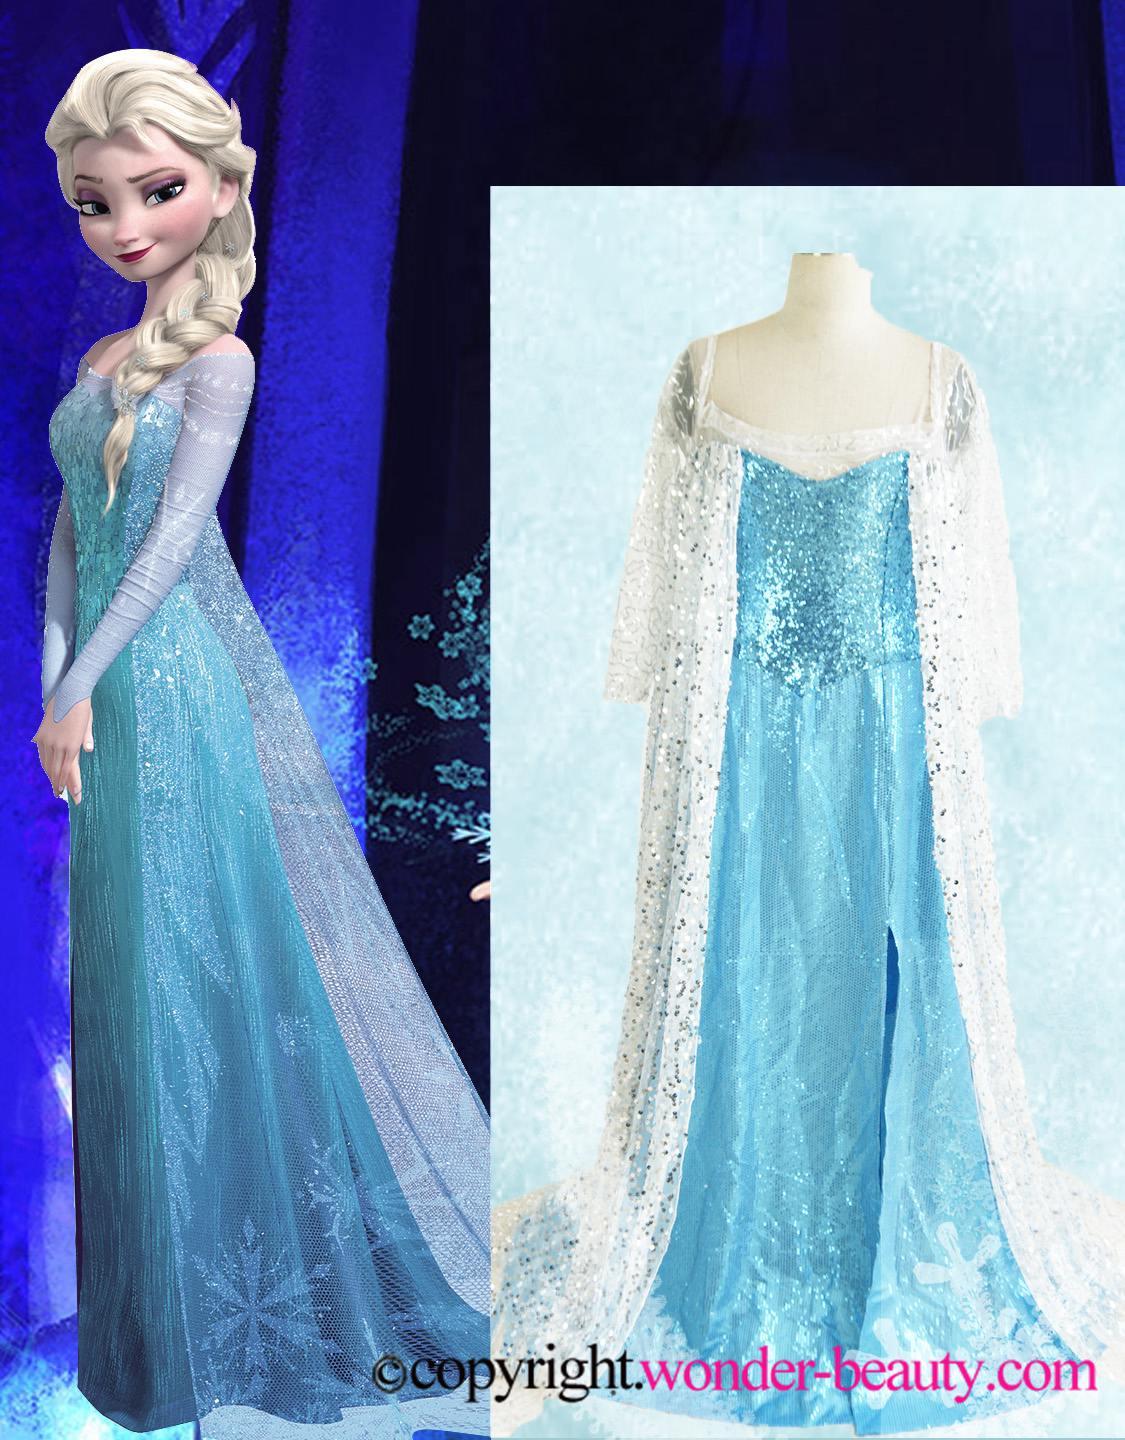 Lovely Frozen Queen Elsa Costume From Movie_Wonder Beauty lingerie ...